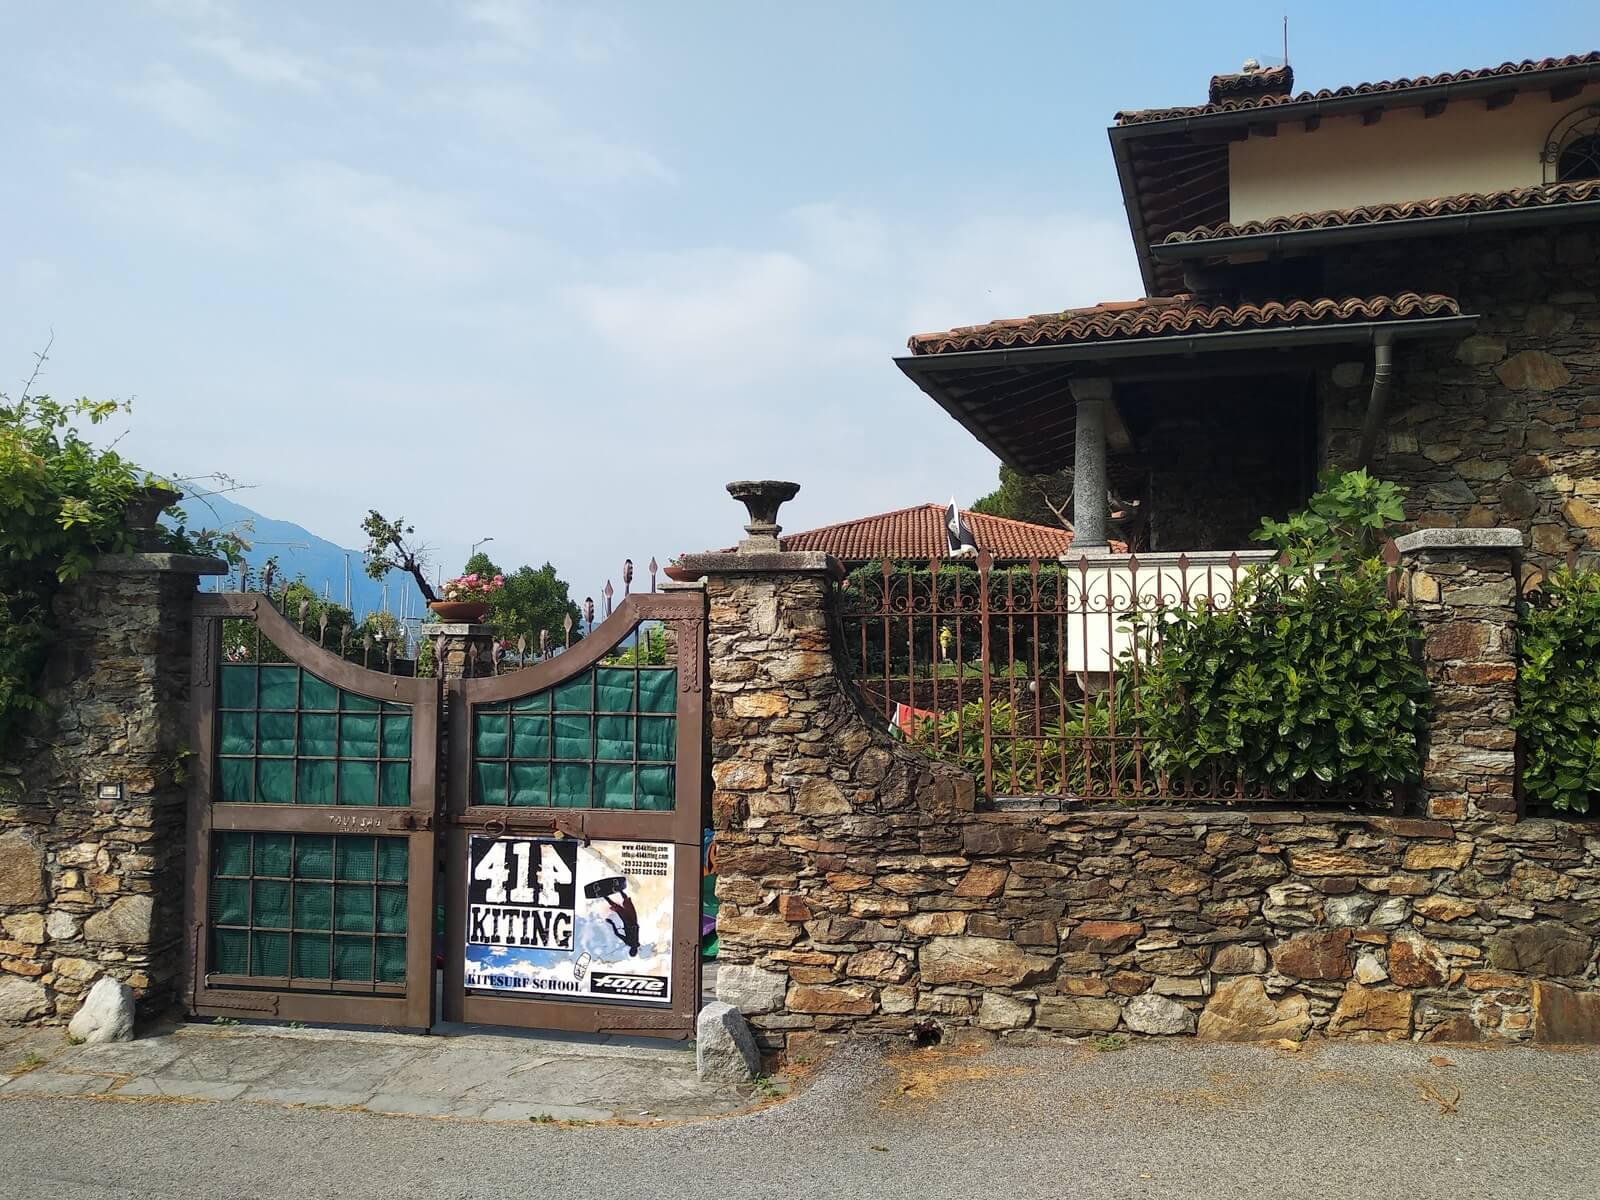 414 Kiting Gera Lario, Lake Como